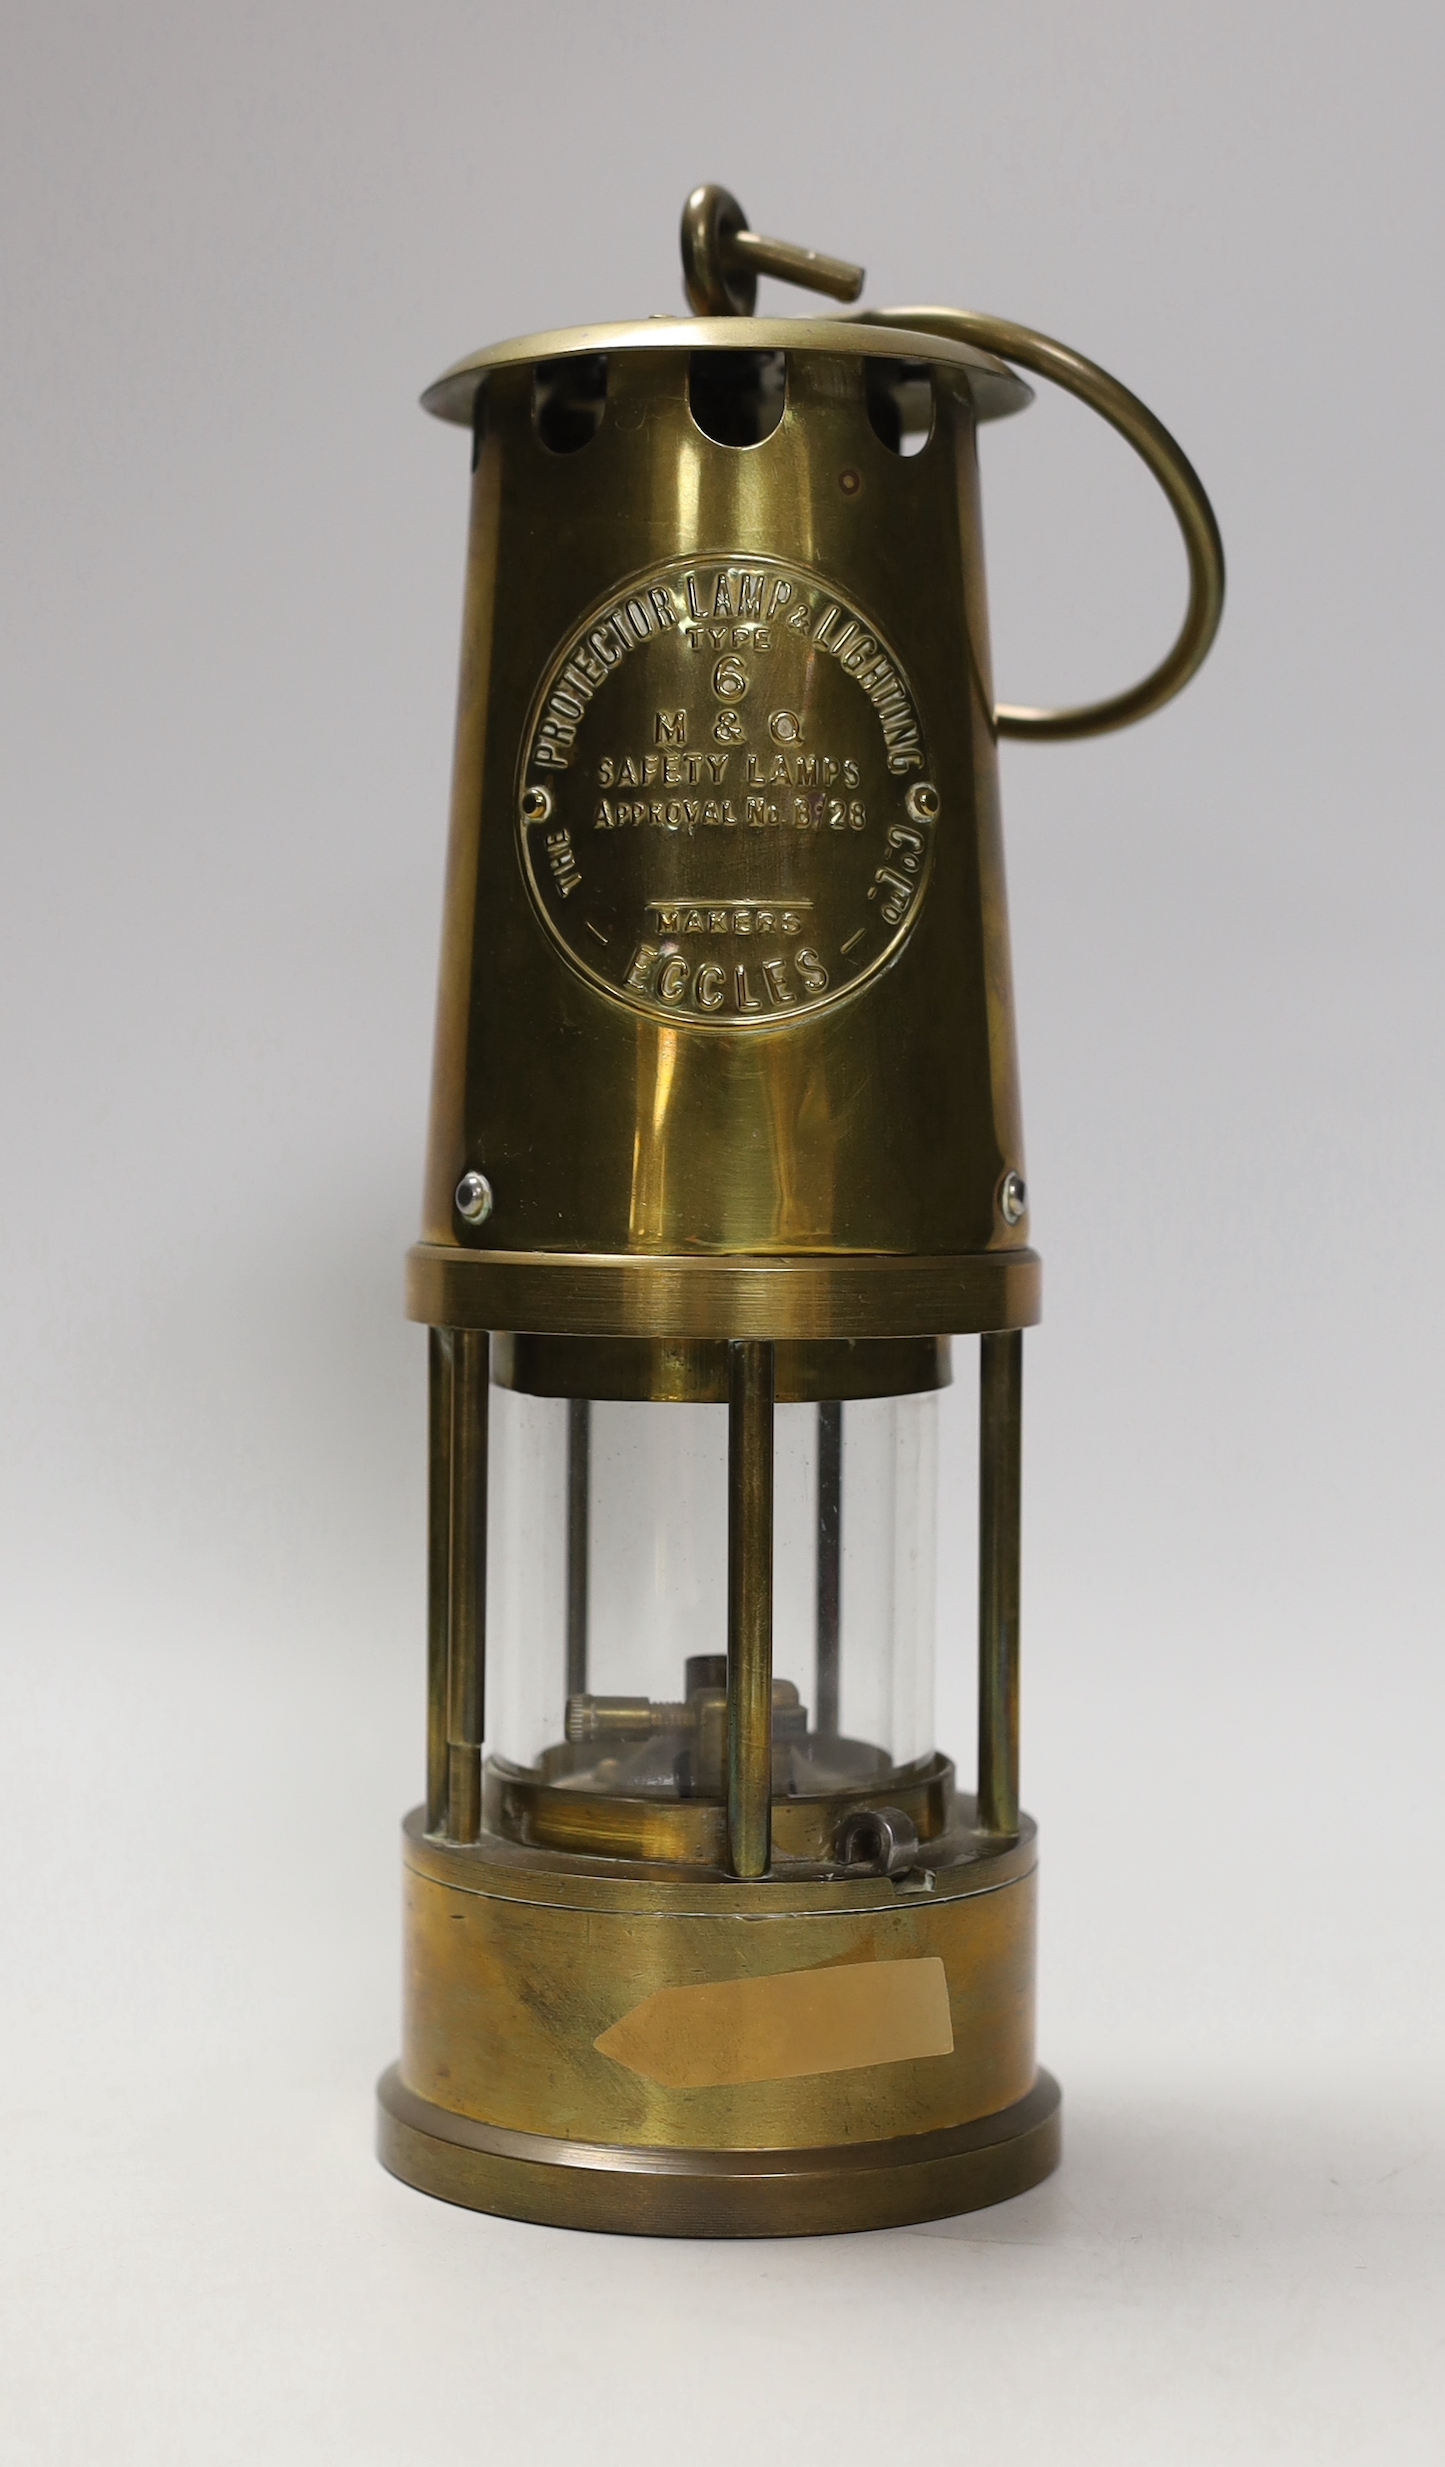 An Eccles brass miner's lamp